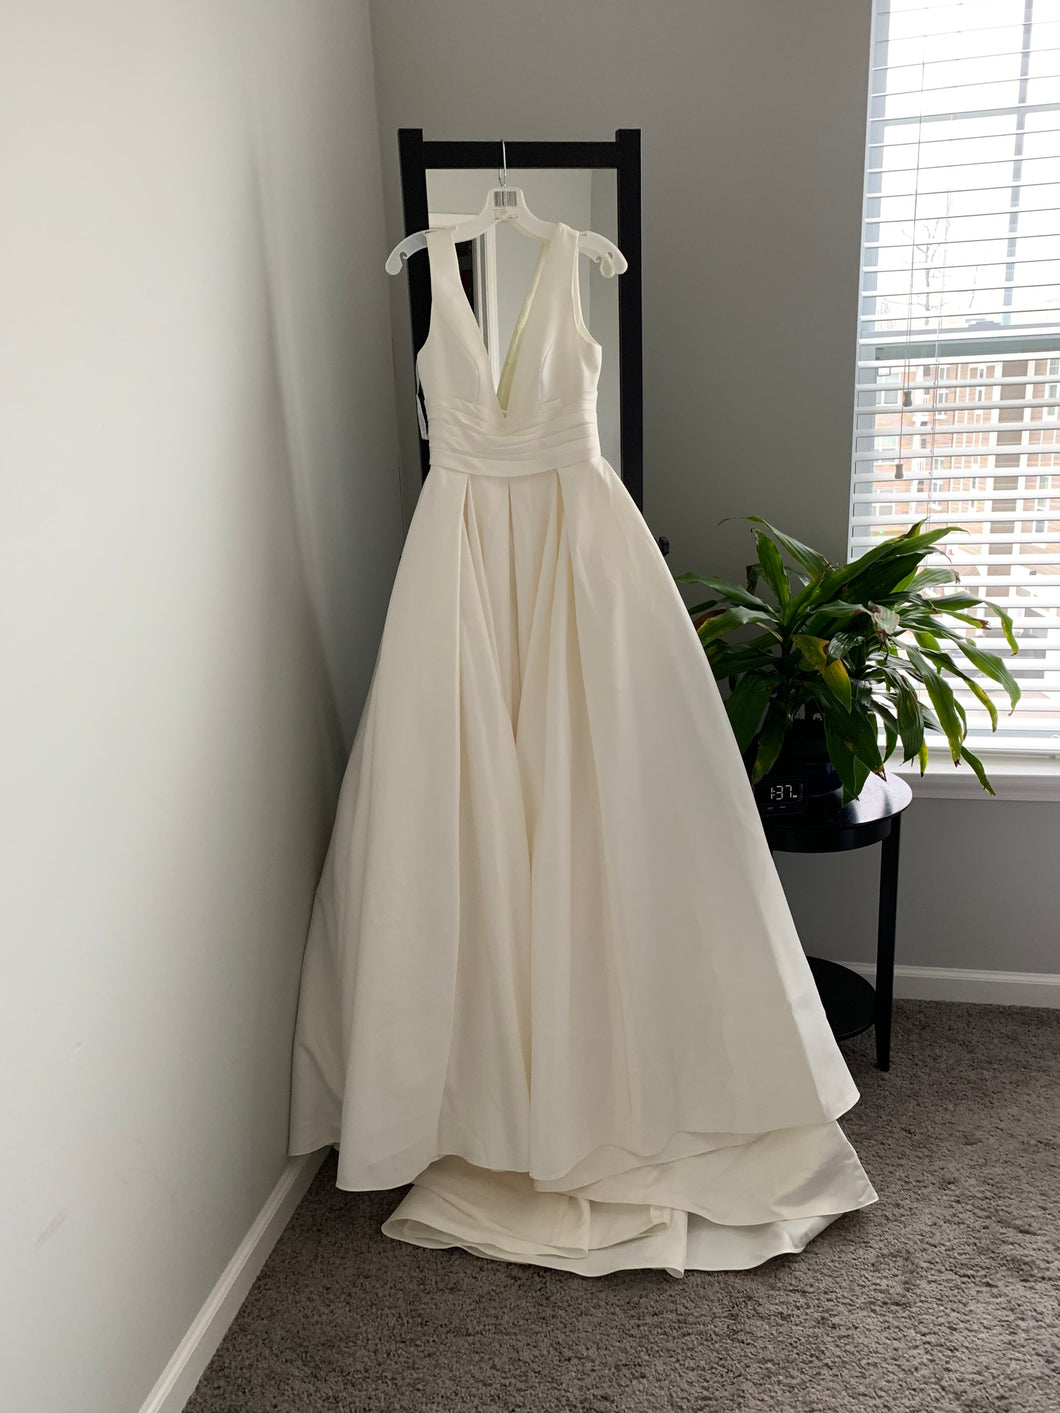 David's Bridal 'Satin Cummerbund' wedding dress size-04 NEW